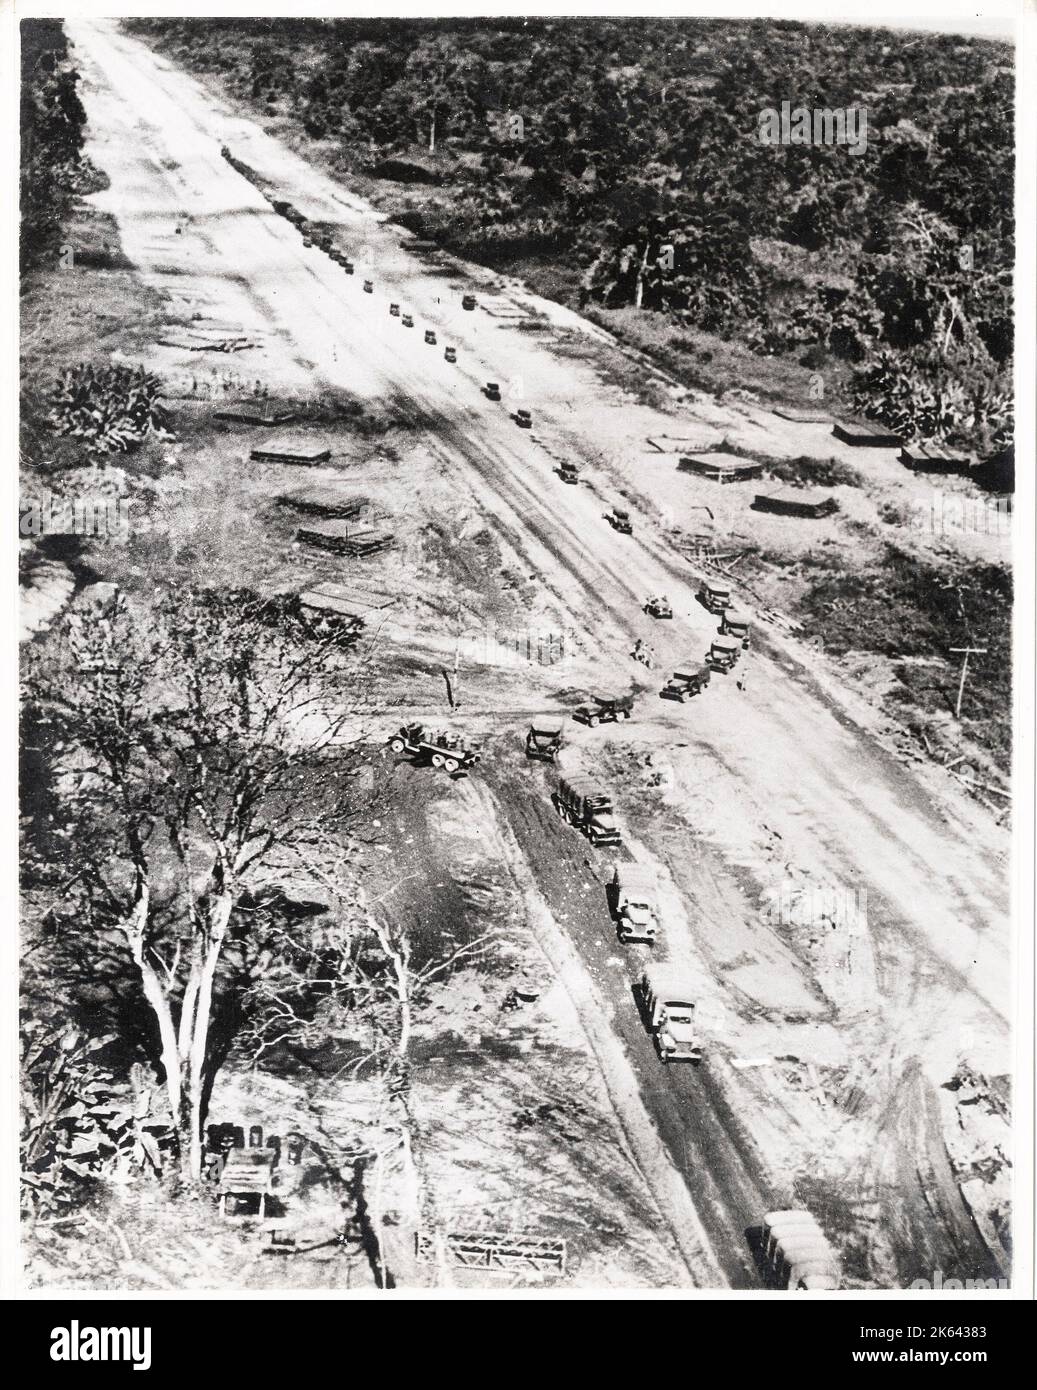 Vintage photograph World War II - Burma road open to China - convoy makes its way towards Kunrming Stock Photo